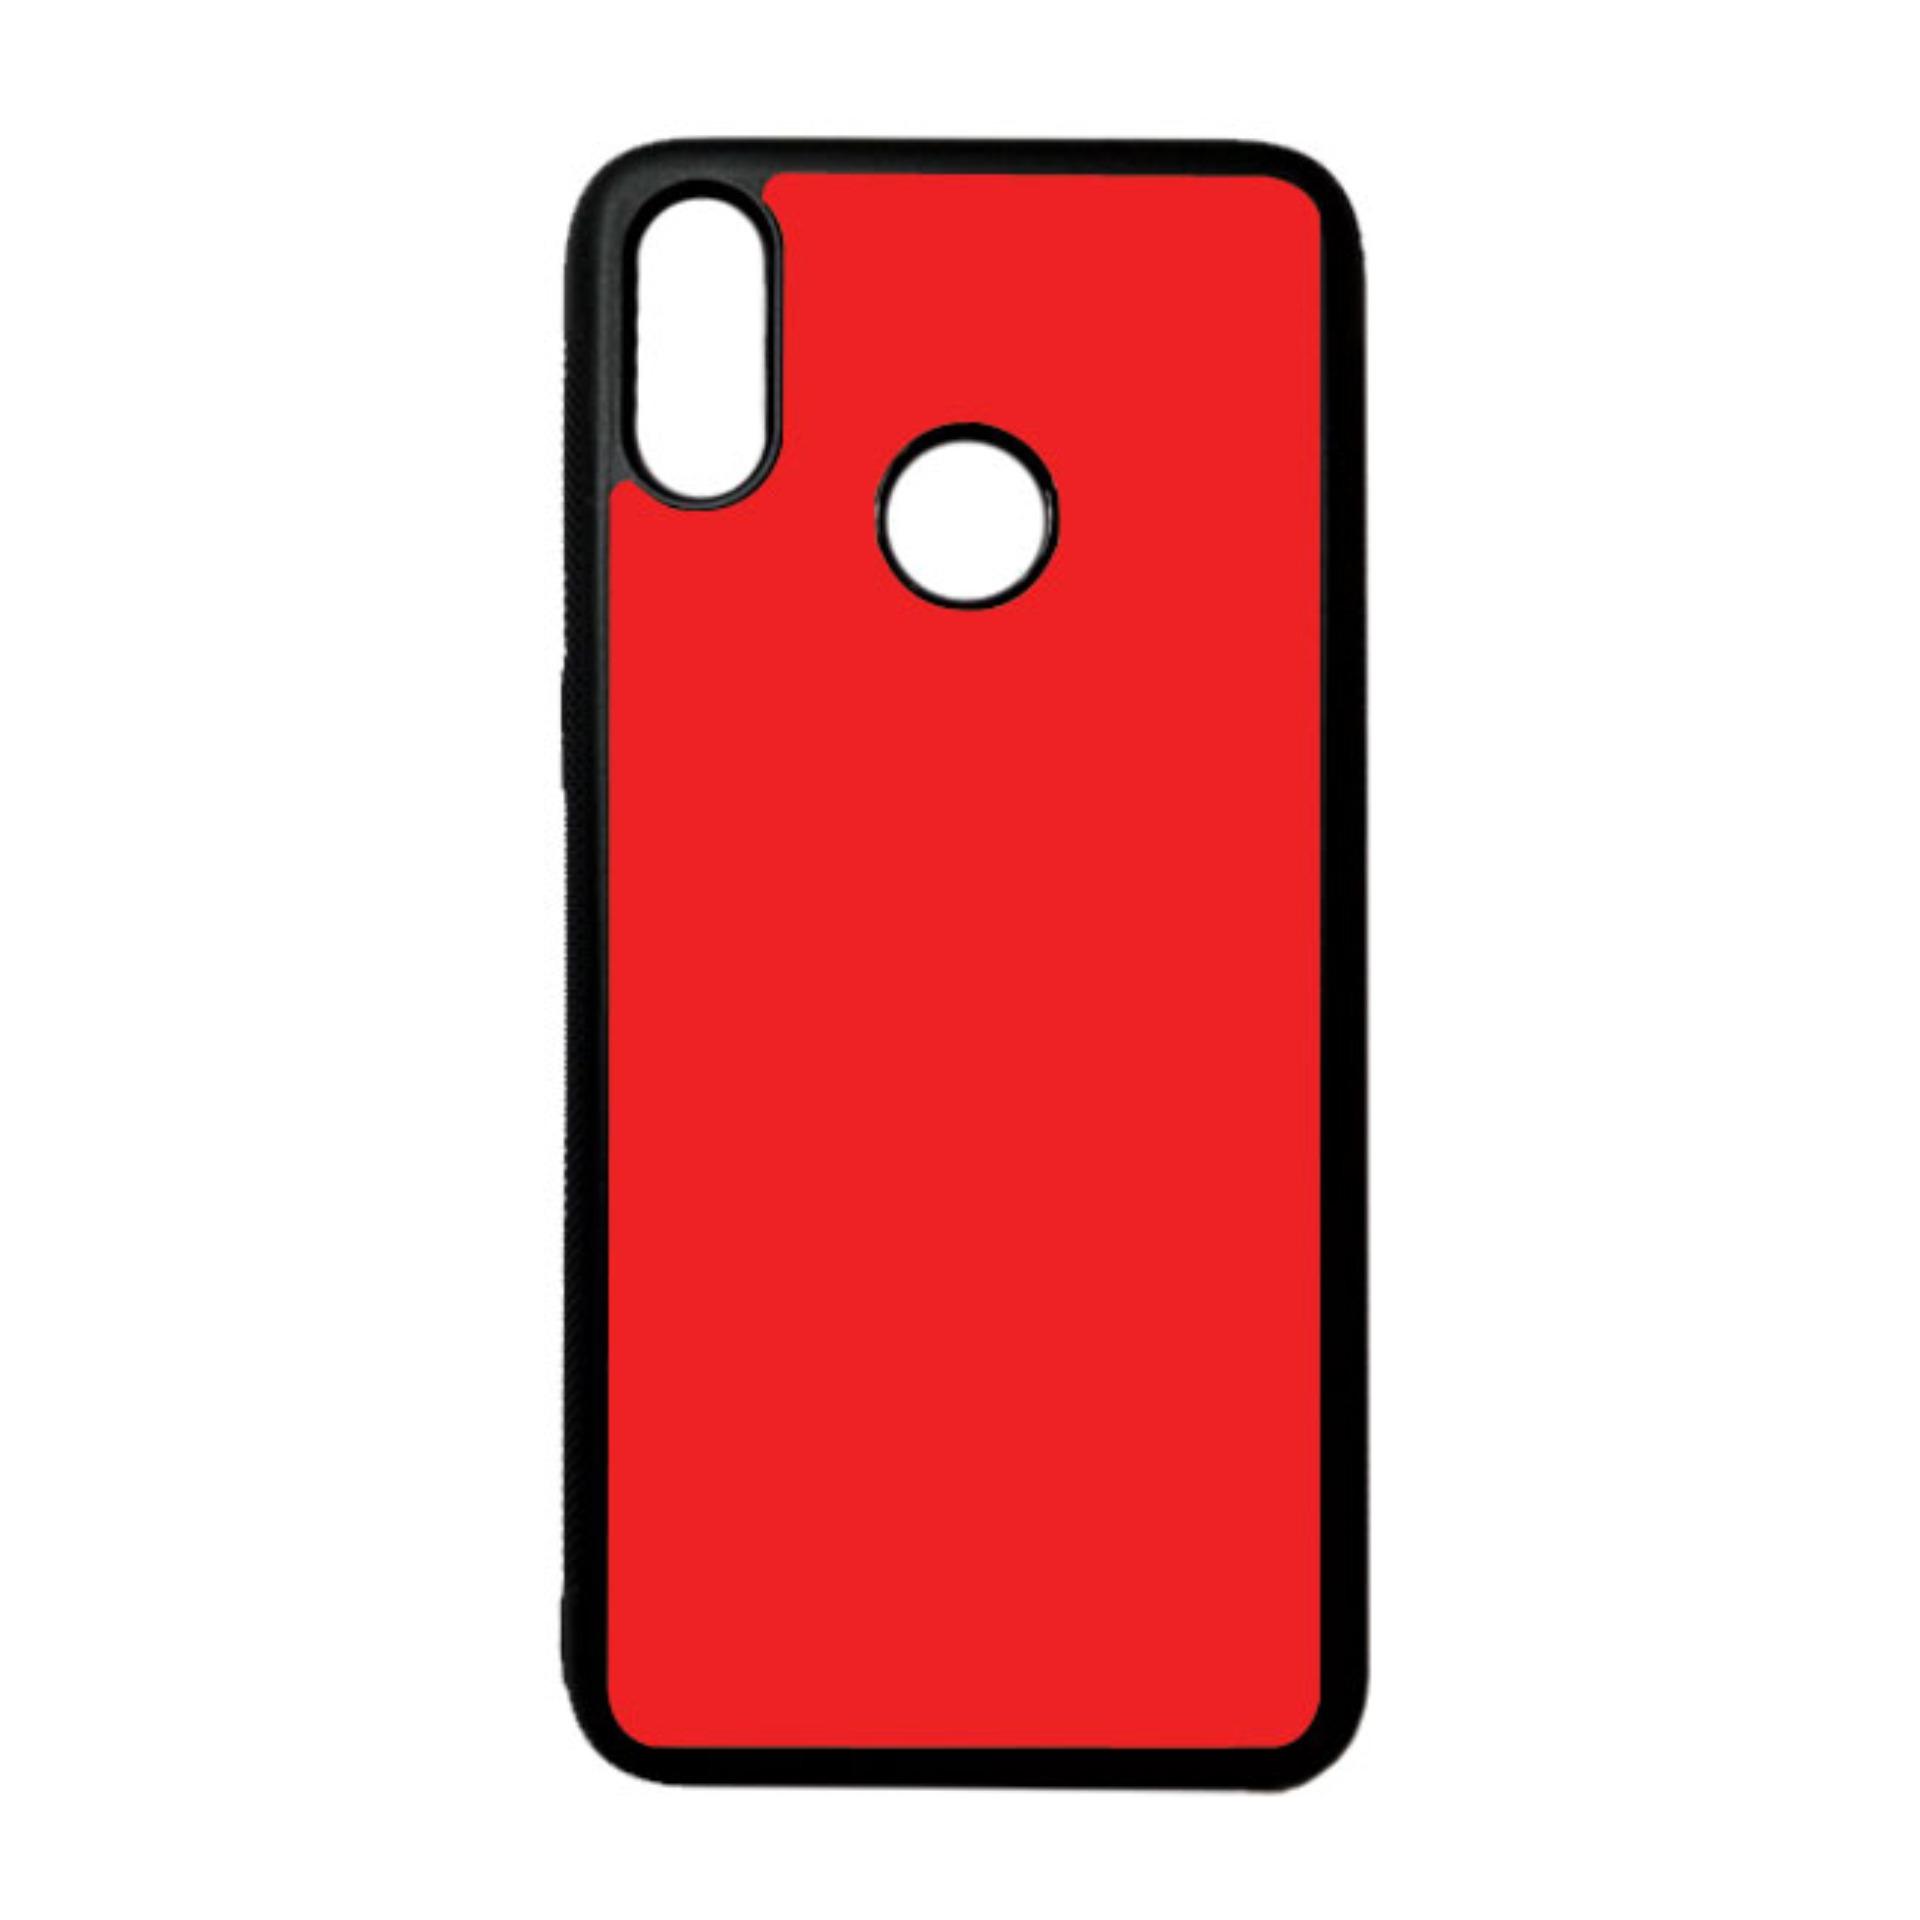 Harga Hp Samsung Note 3 Warna Merah